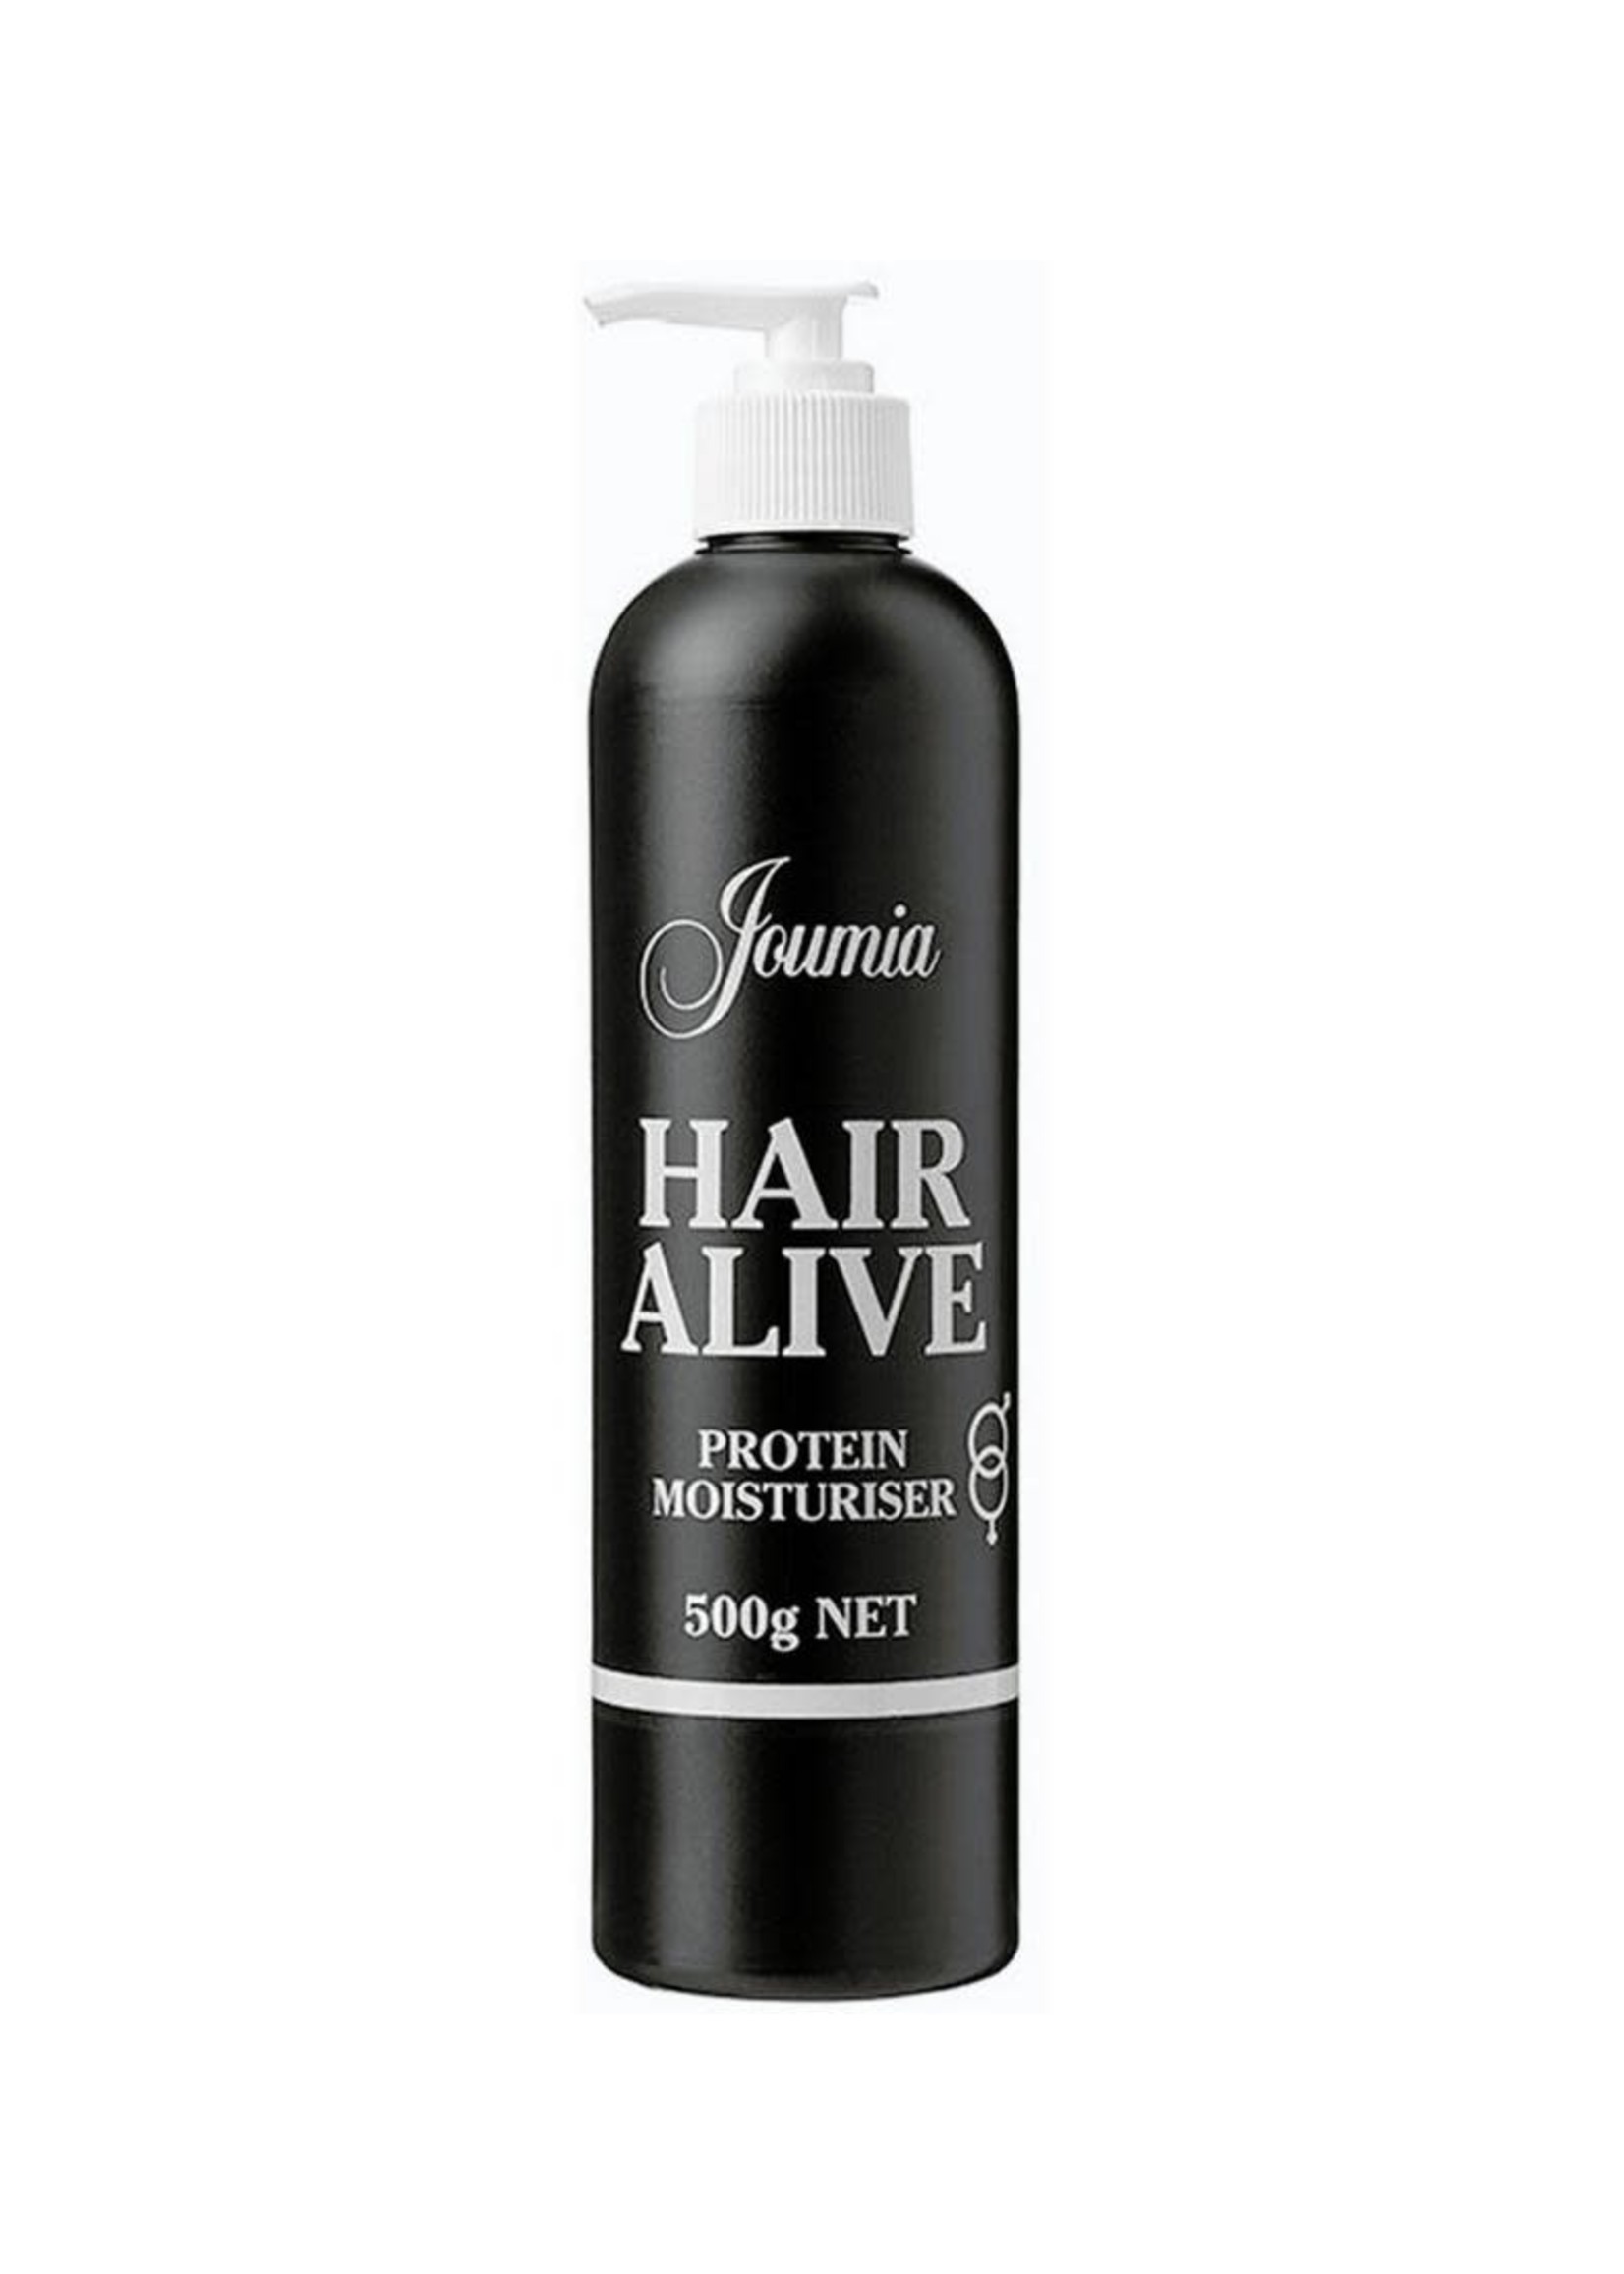 Joumia Hair Alive Moisturiser 500g